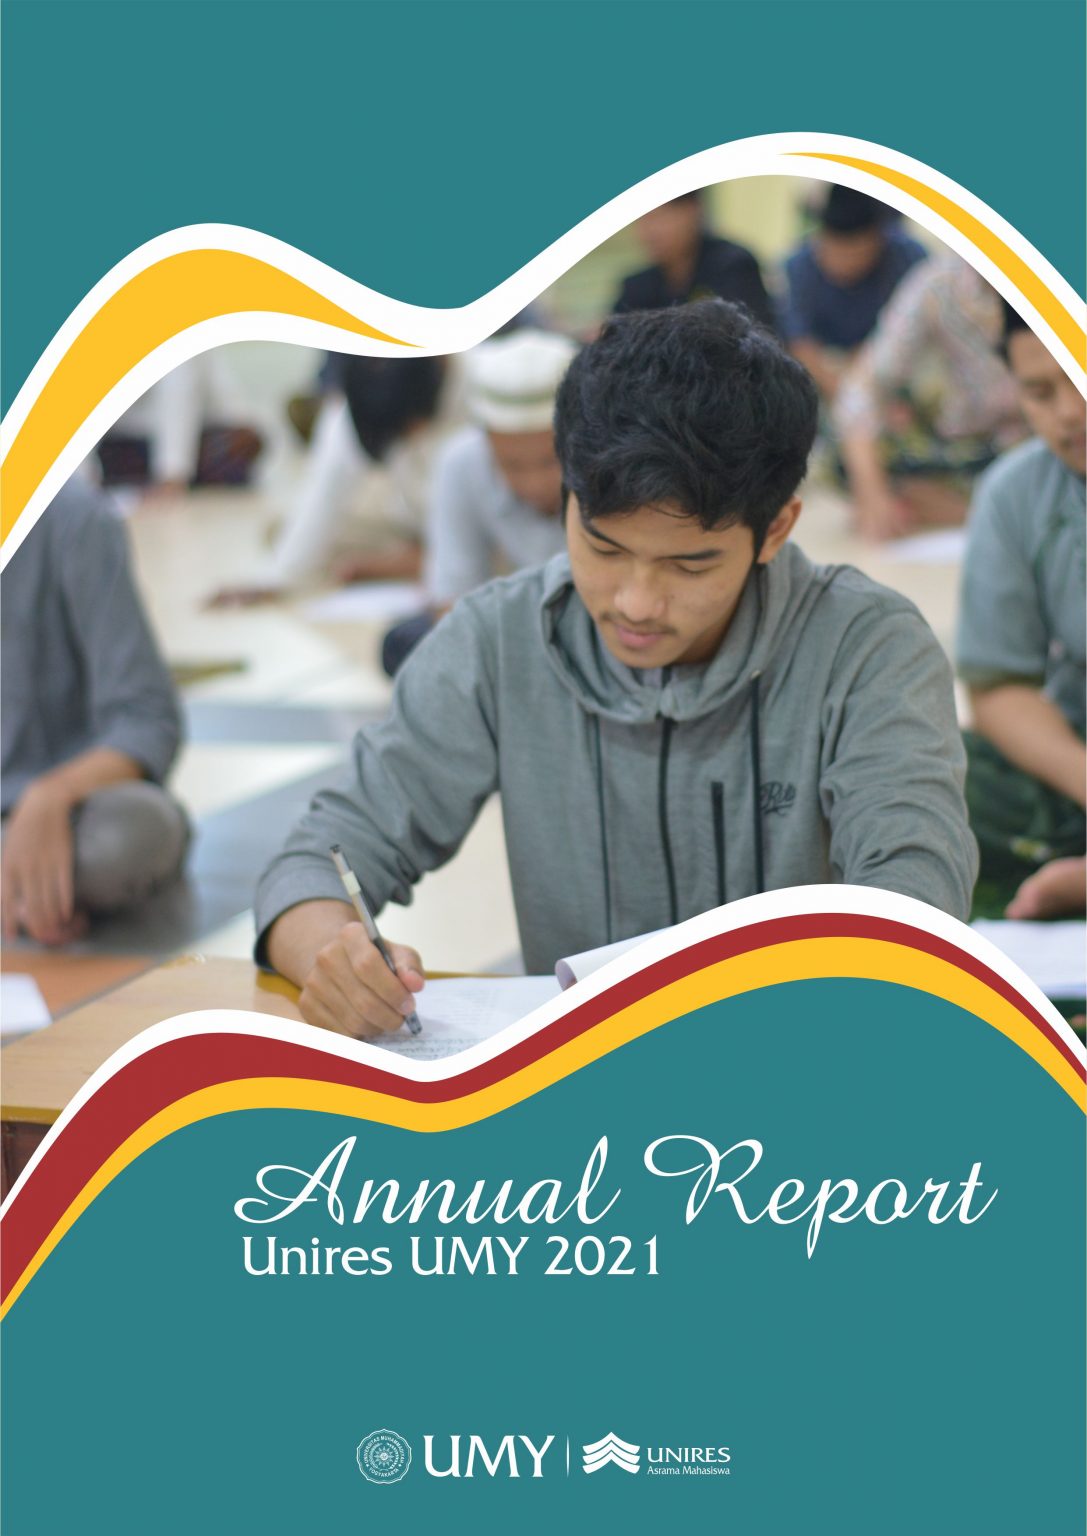 Annual Report Uniress